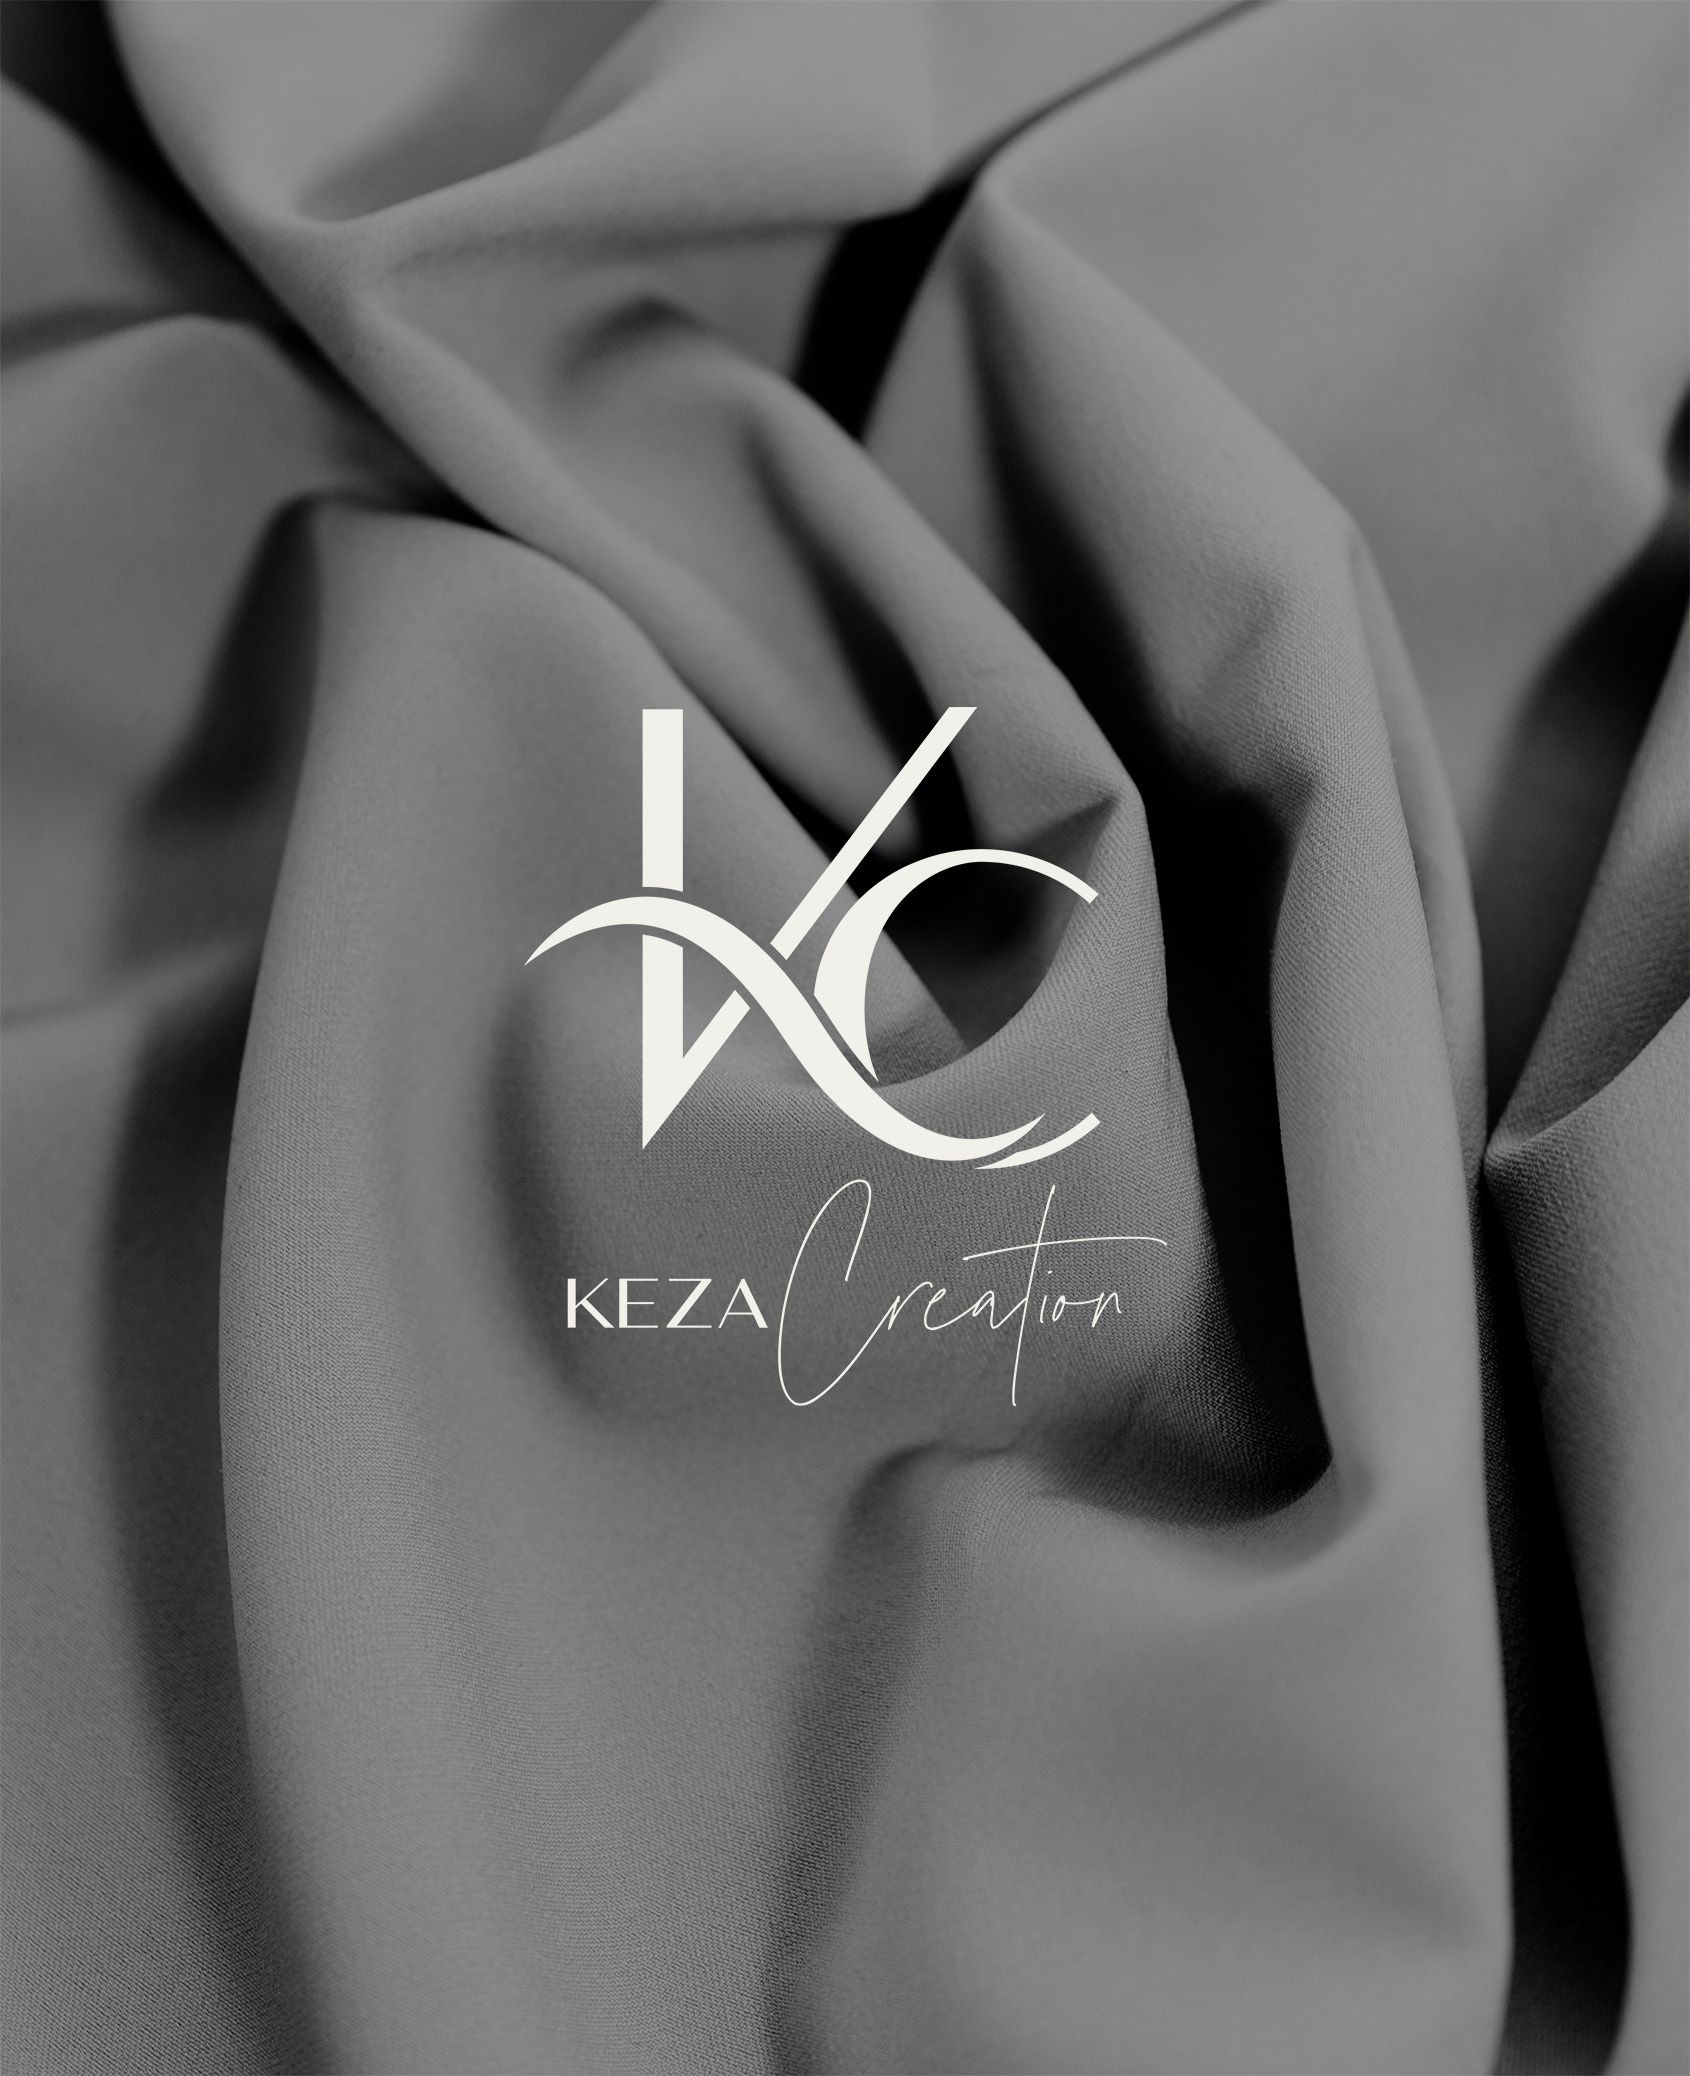 Kezacreation logo